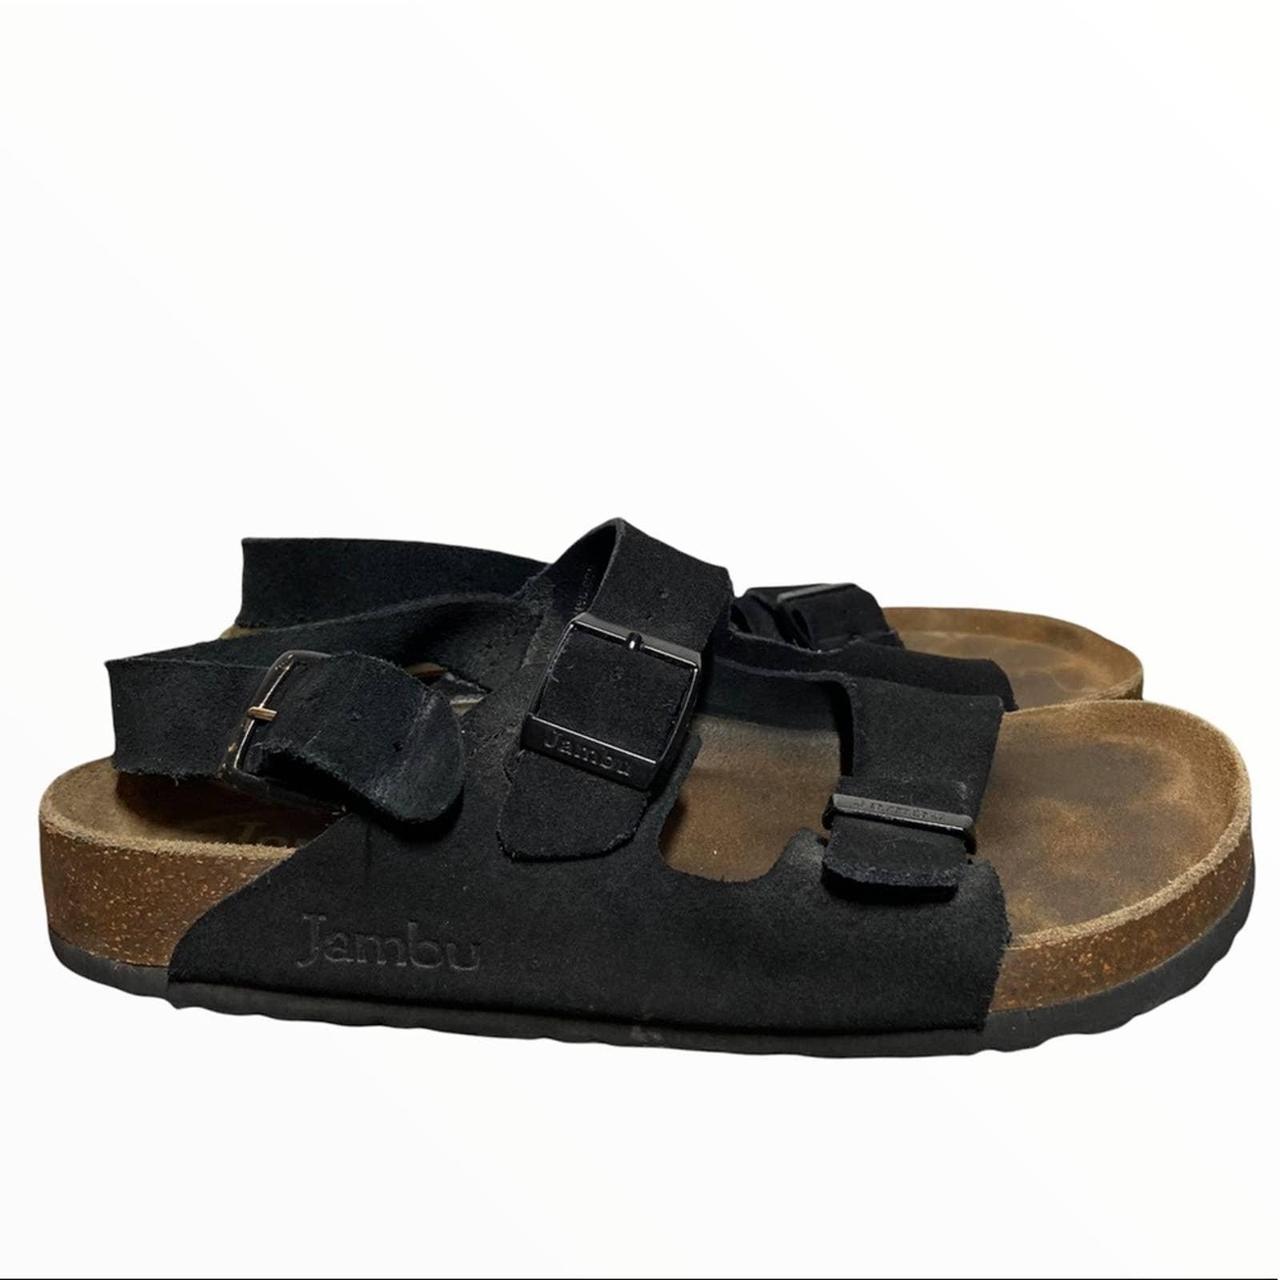 Product Image 1 - Jambu Woodstock Sandals Suede Leather